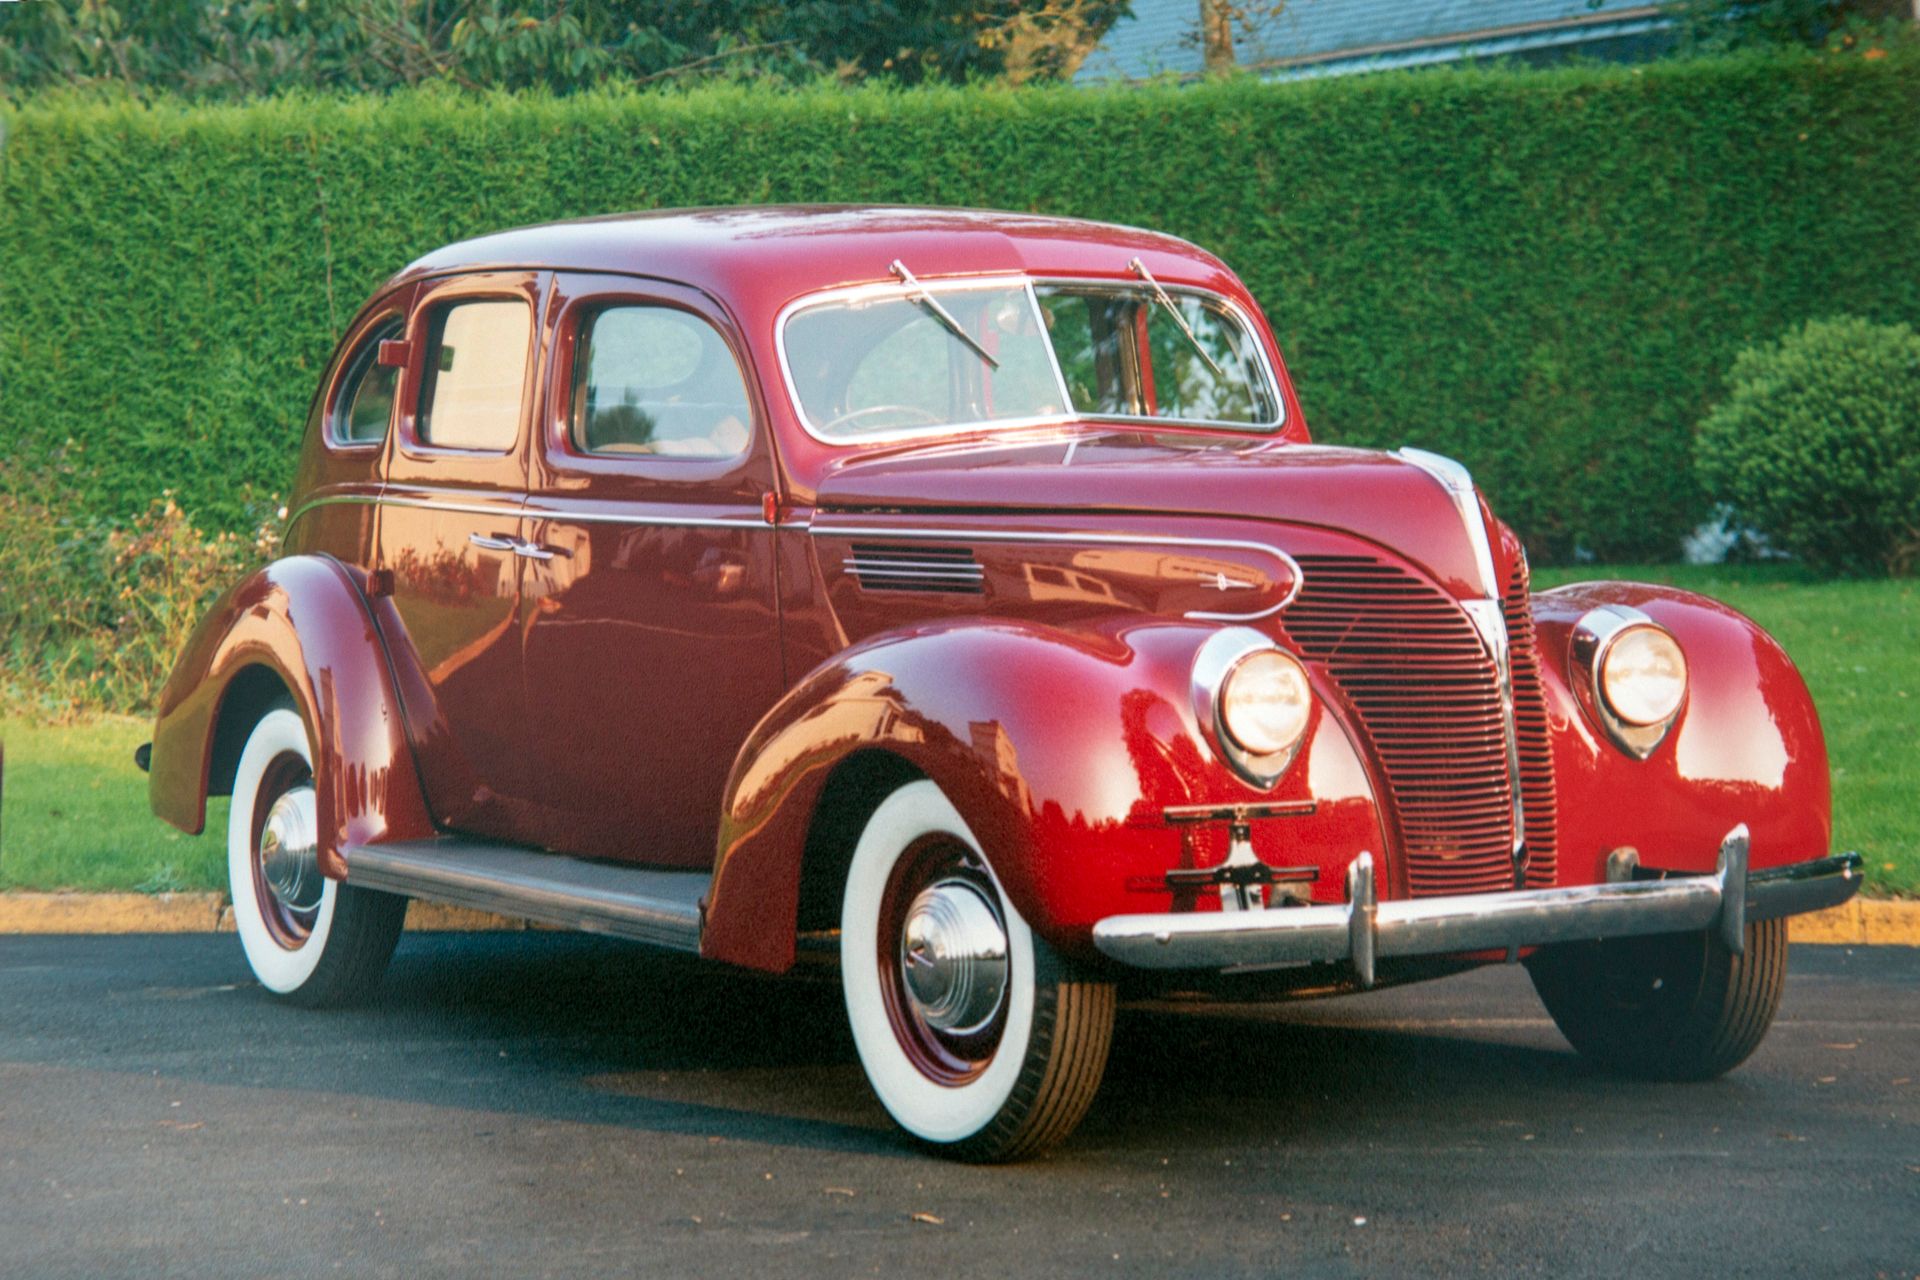 Null L.夫人的遗产 无保留
1939年的福特汽车
类型：V8
车身：标准轿车
序列号：RPA 013345
将在收藏品中登记
10 000 / 15 00&hellip;